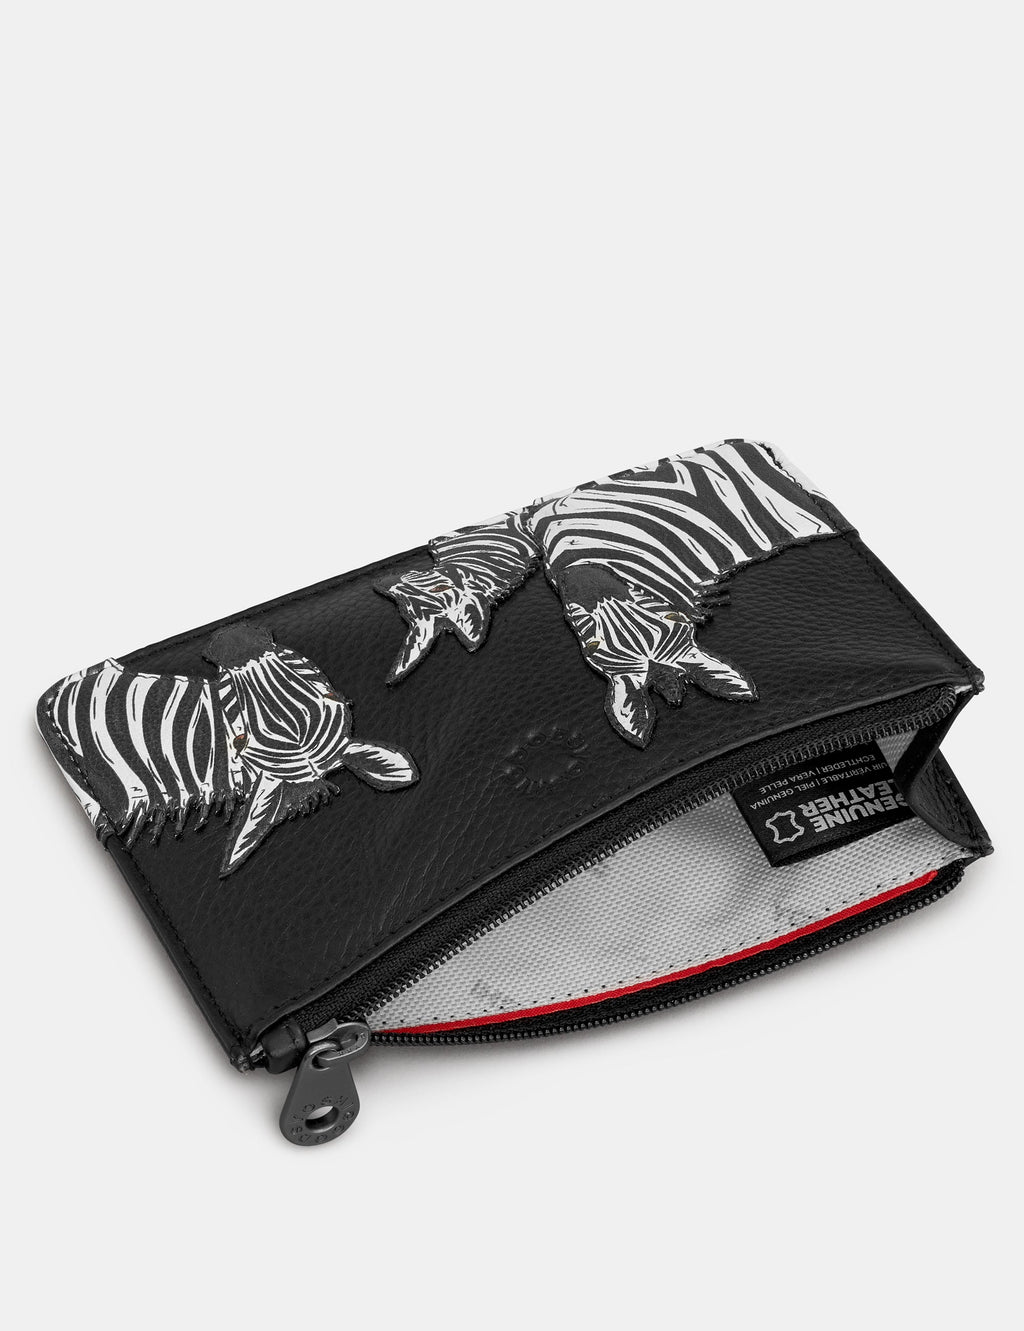 Yoshi - Black Zebra Zip Top Purse RFID